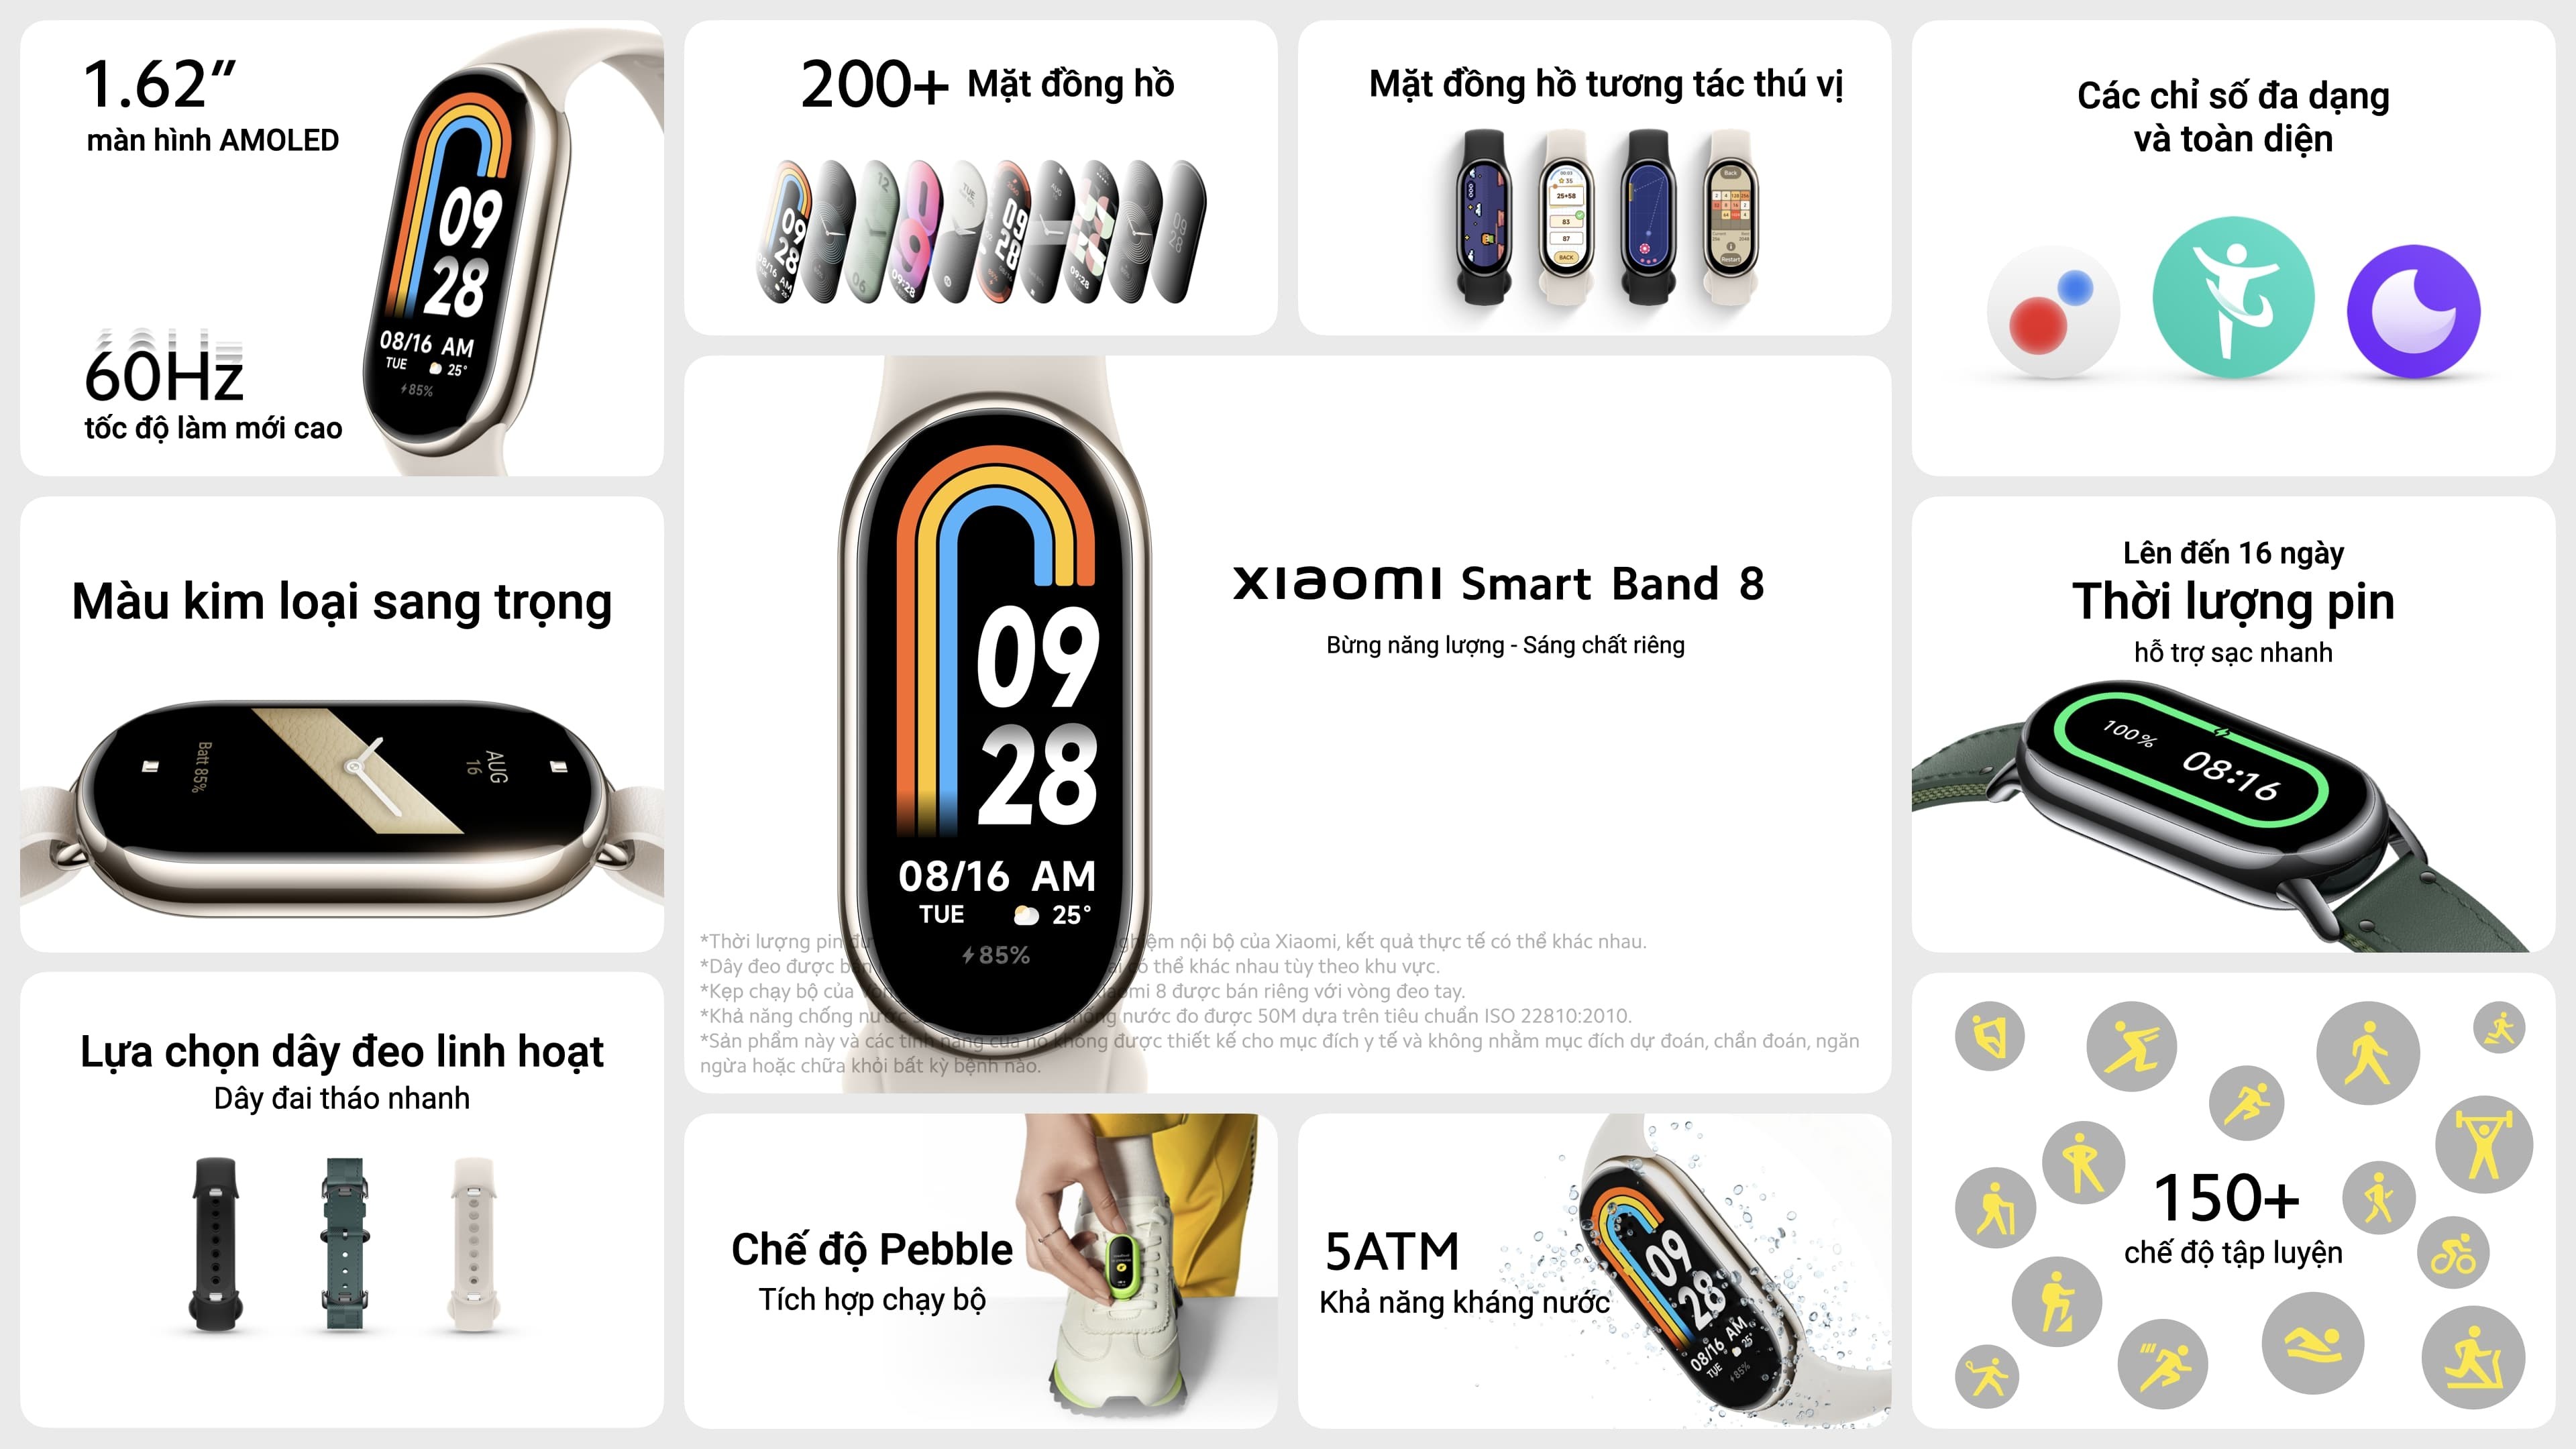 xiaomi-smart-band-8-series-4-min-1698648411.jpg